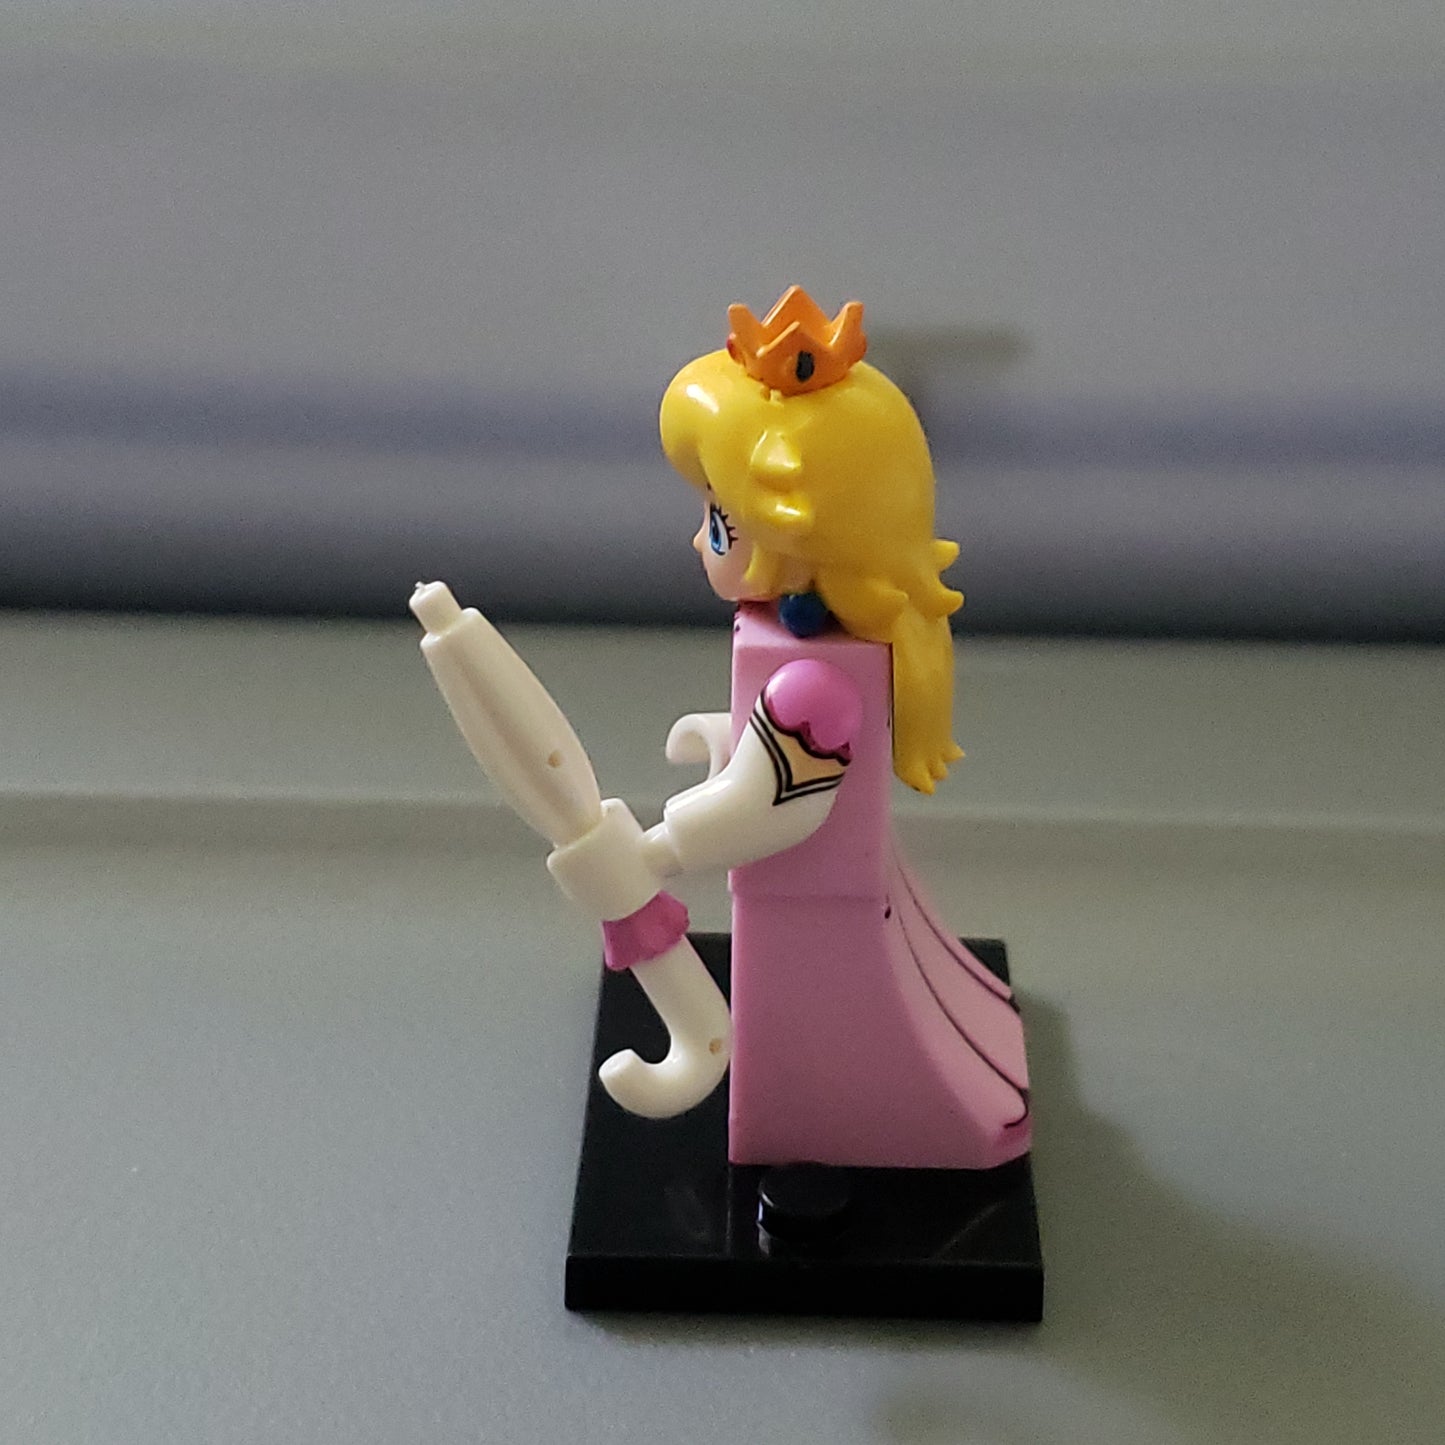 Custom Lego Compatible Princess Peach Minifig